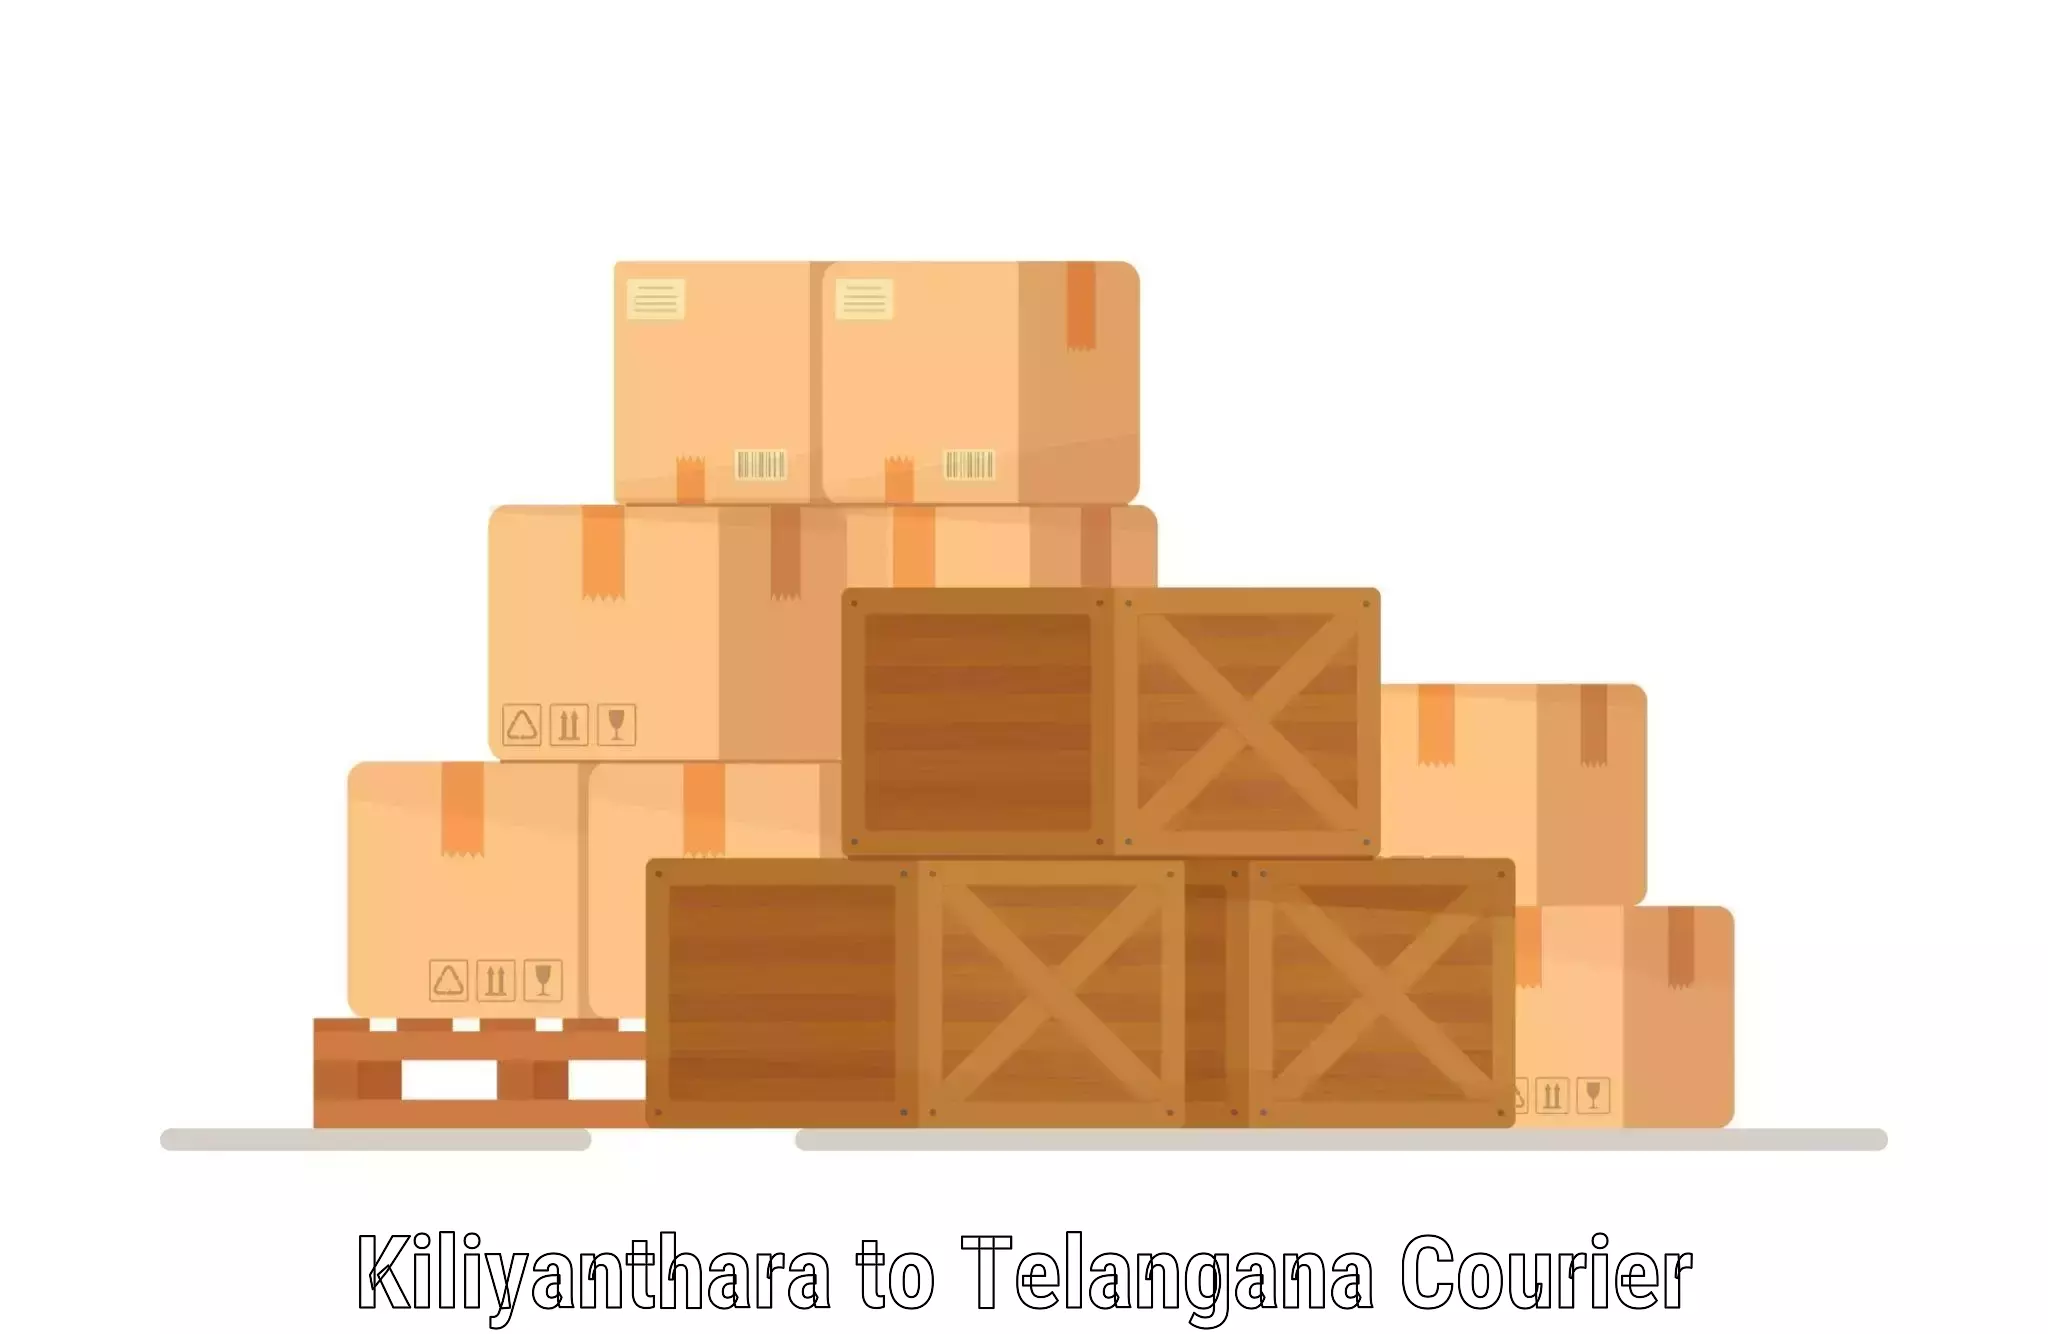 Business shipping needs Kiliyanthara to Yellandu